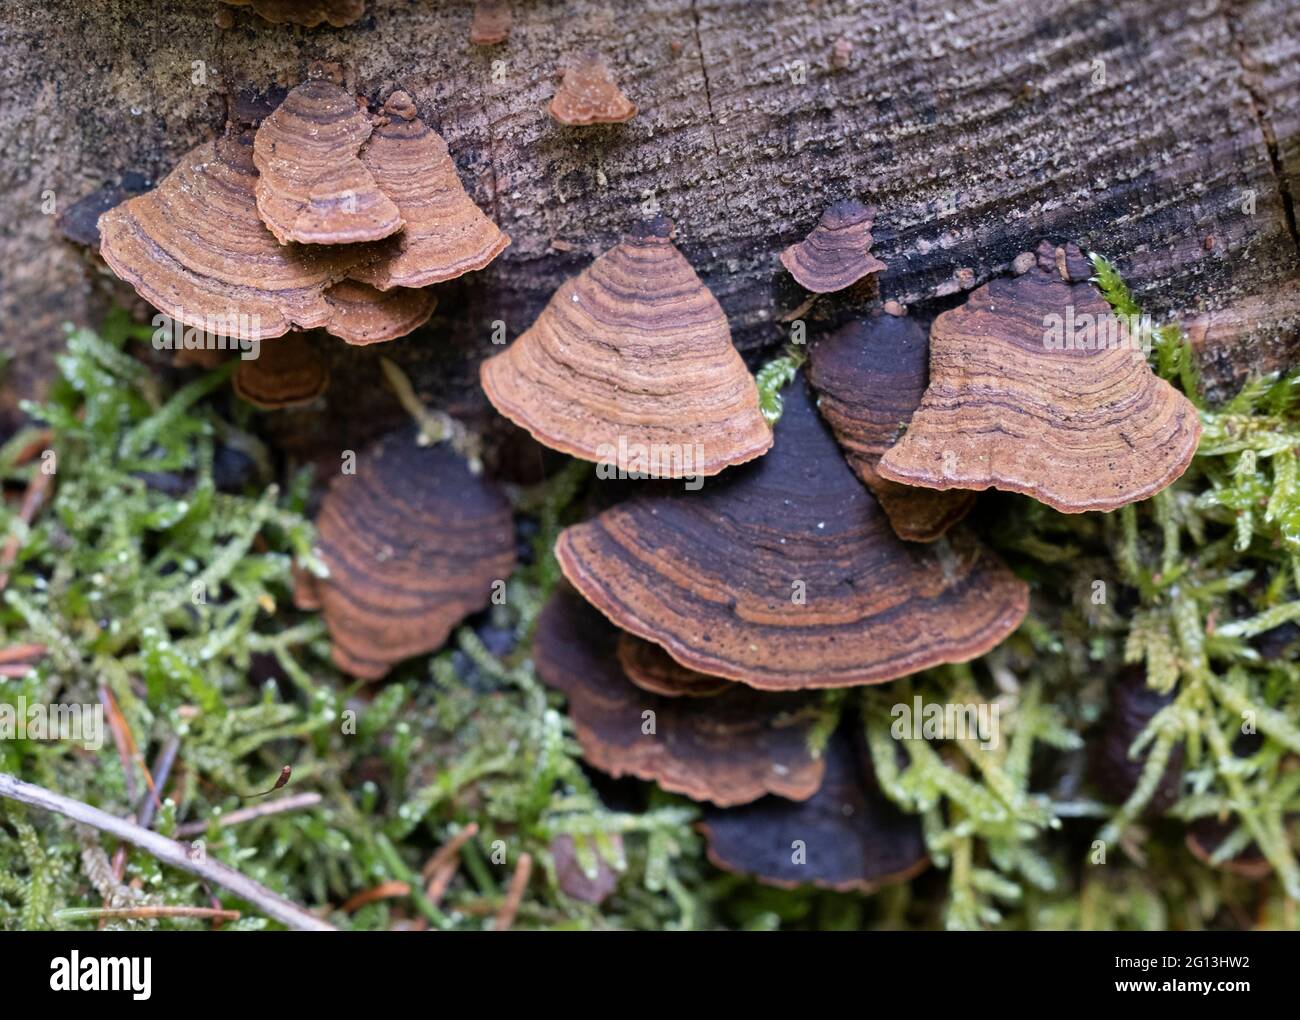 Hymenochaete rubiginosa, Oak Curtain Crust fungus in closeup Stock Photo